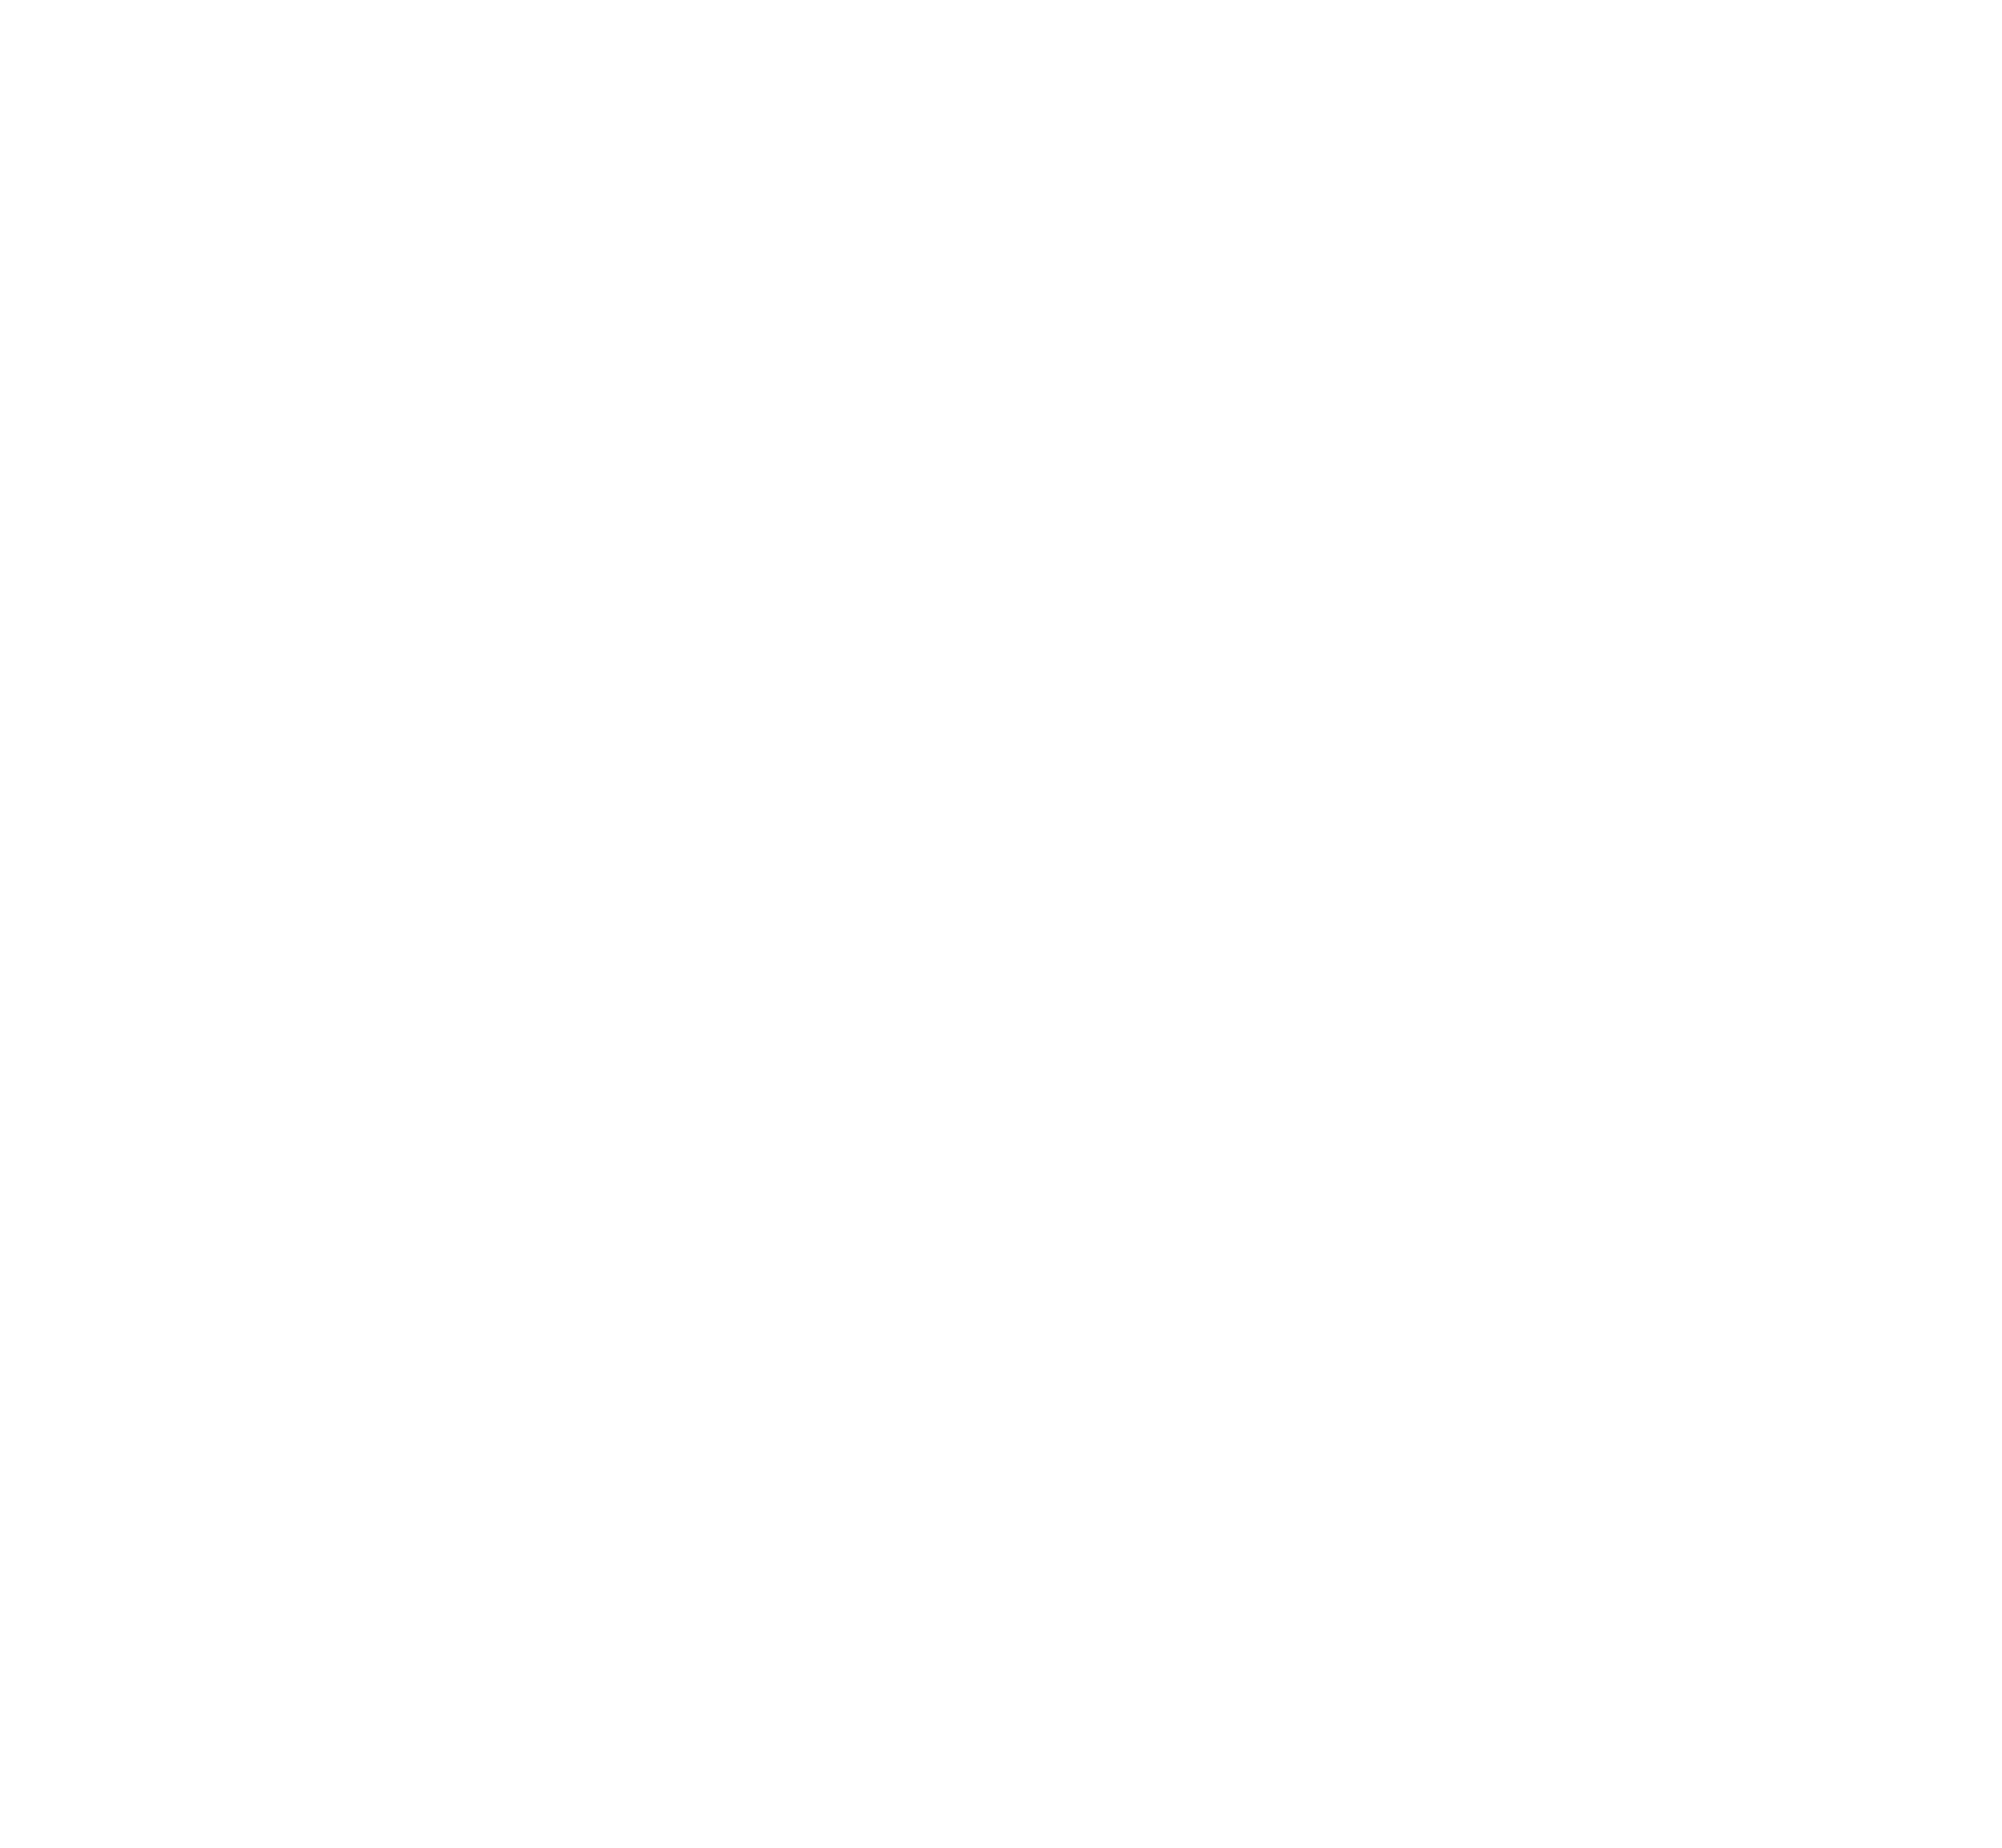 South Carolina Legislature